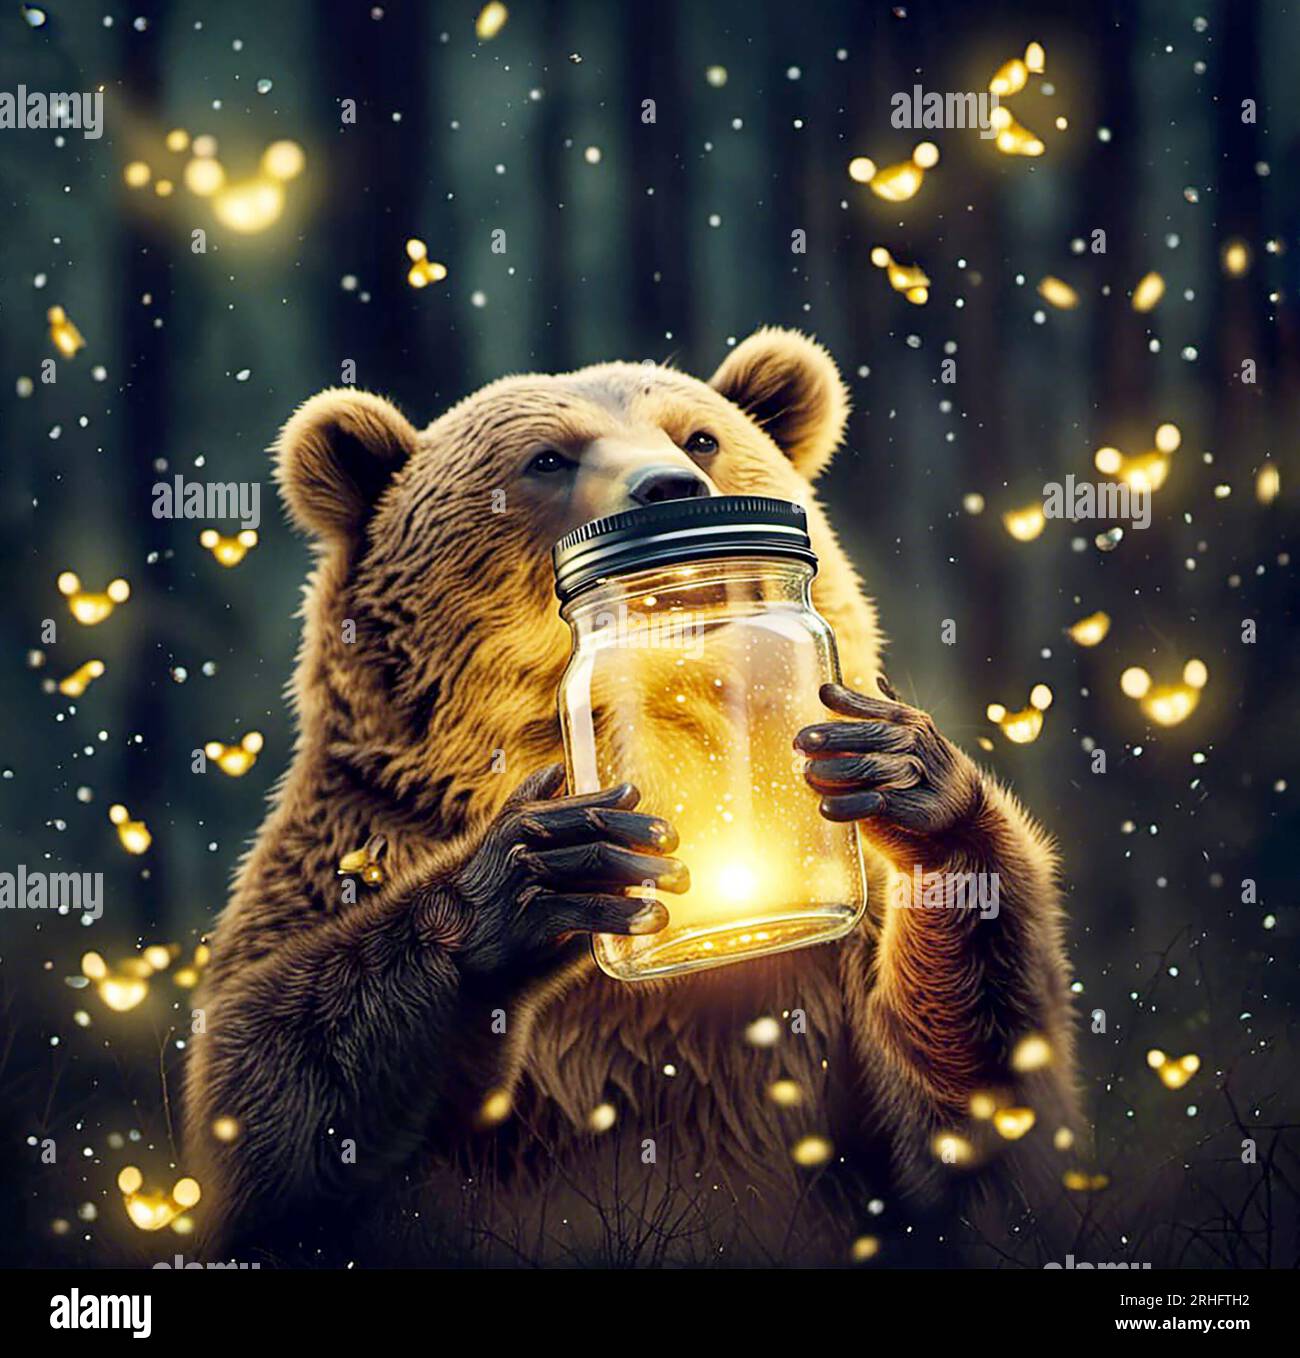 https://c8.alamy.com/comp/2RHFTH2/brown-bear-in-dark-forest-holding-a-glass-mason-jar-filled-with-glowing-fireflies-2RHFTH2.jpg